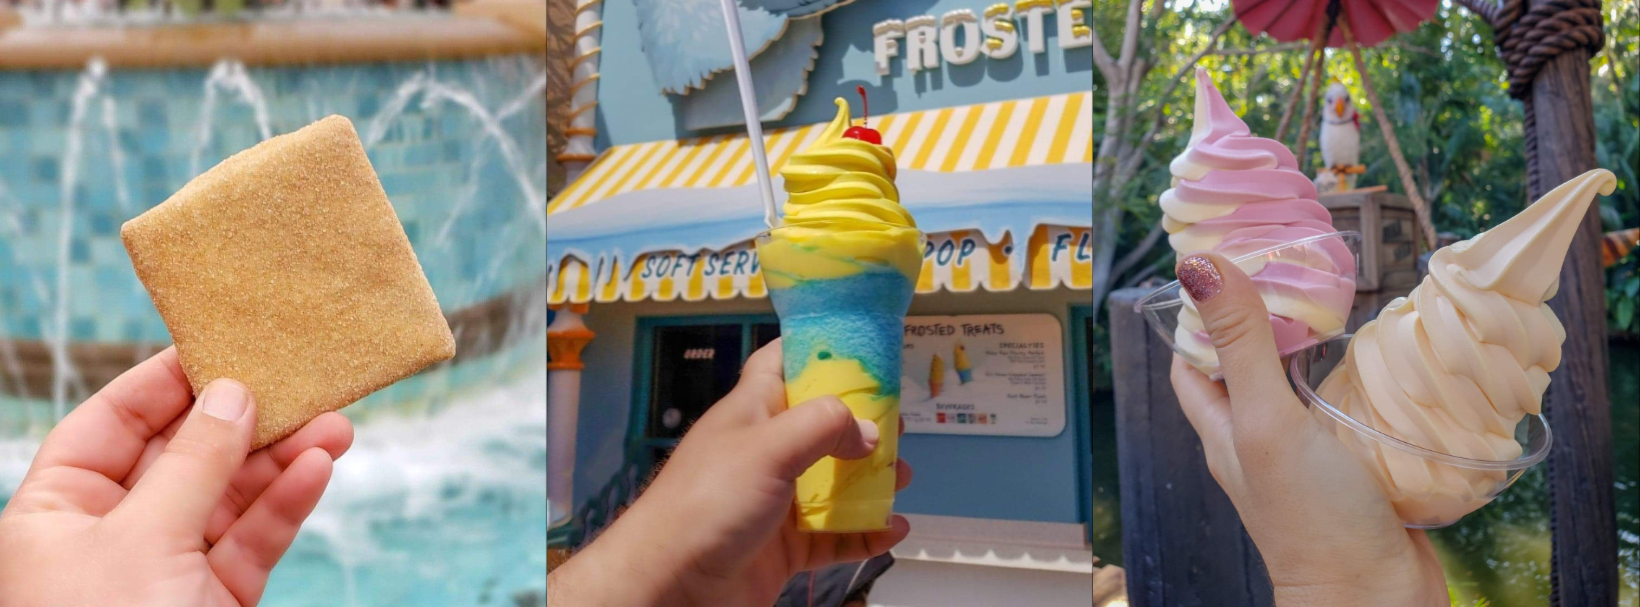 The Pixar Pier Frosty Parfait Is the Best New Snack at Disneyland